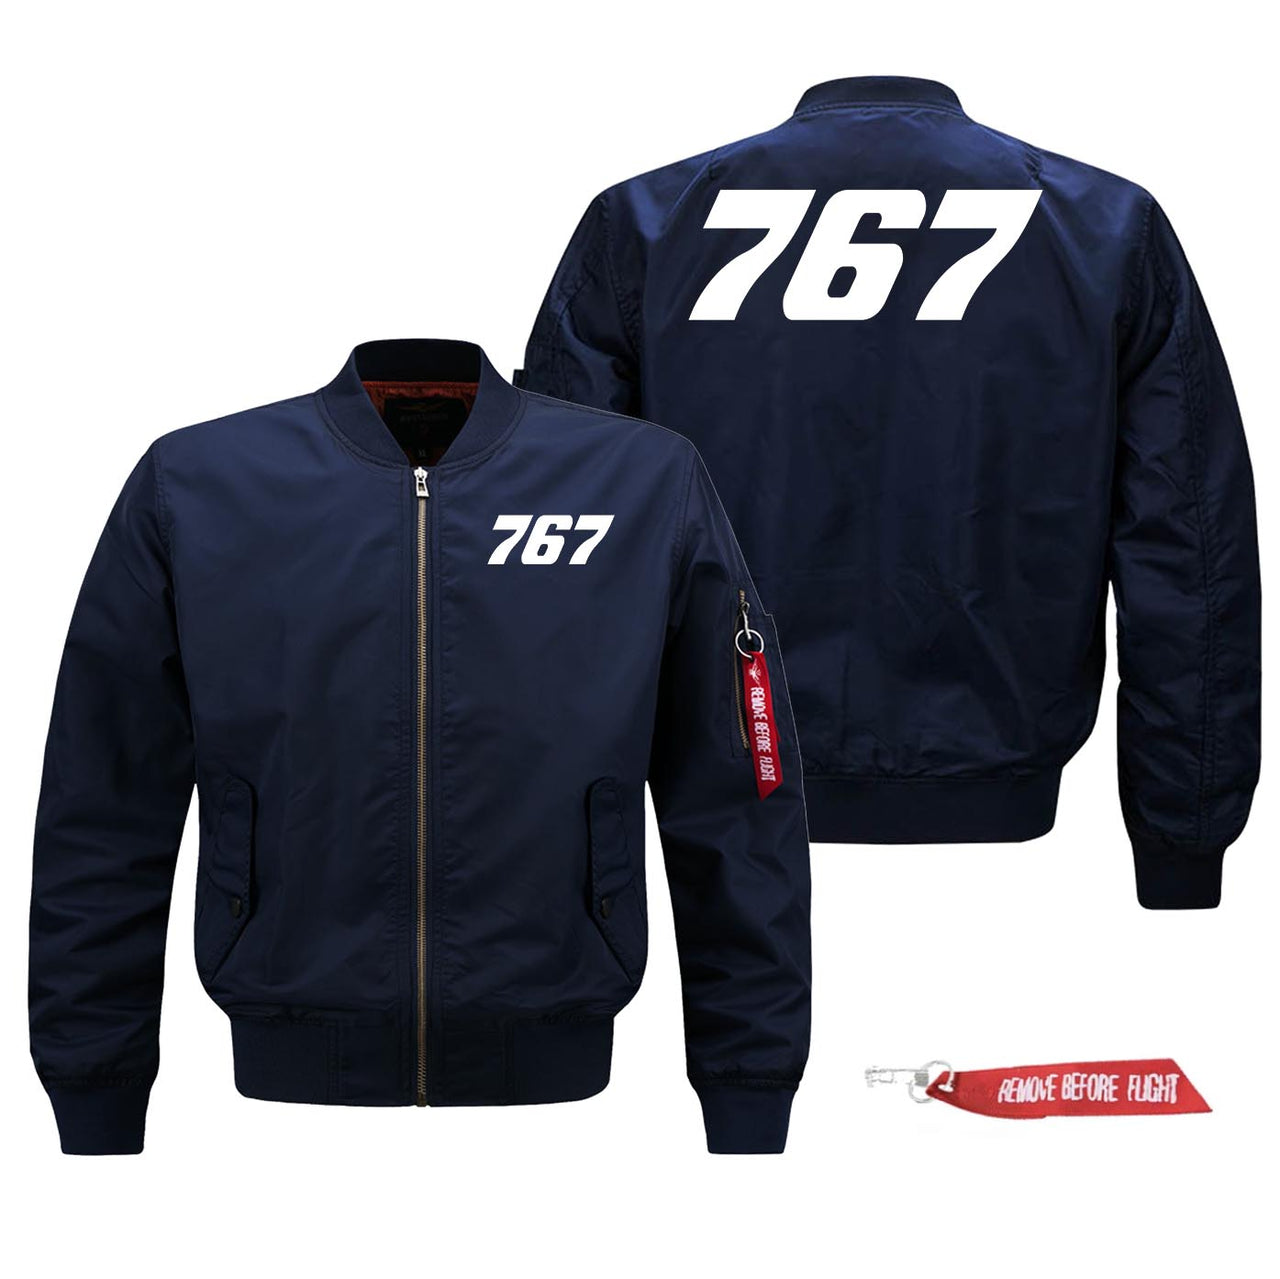 767 Flat Text Designed Pilot Jackets (Customizable)